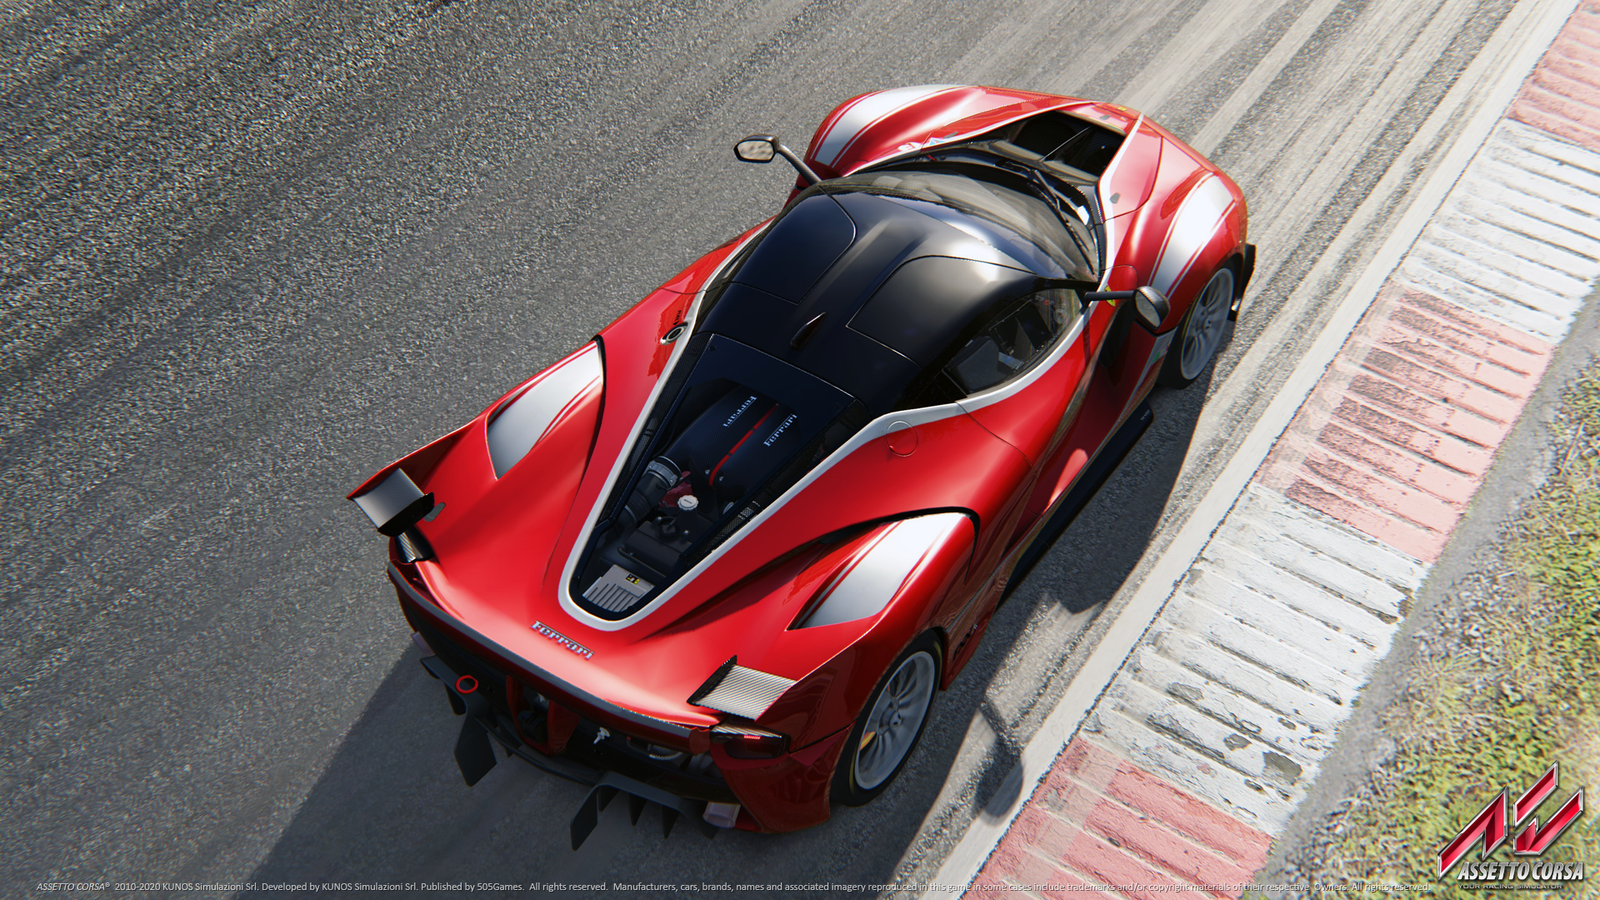 Assetto Corsa PS4 Review: Eccellente